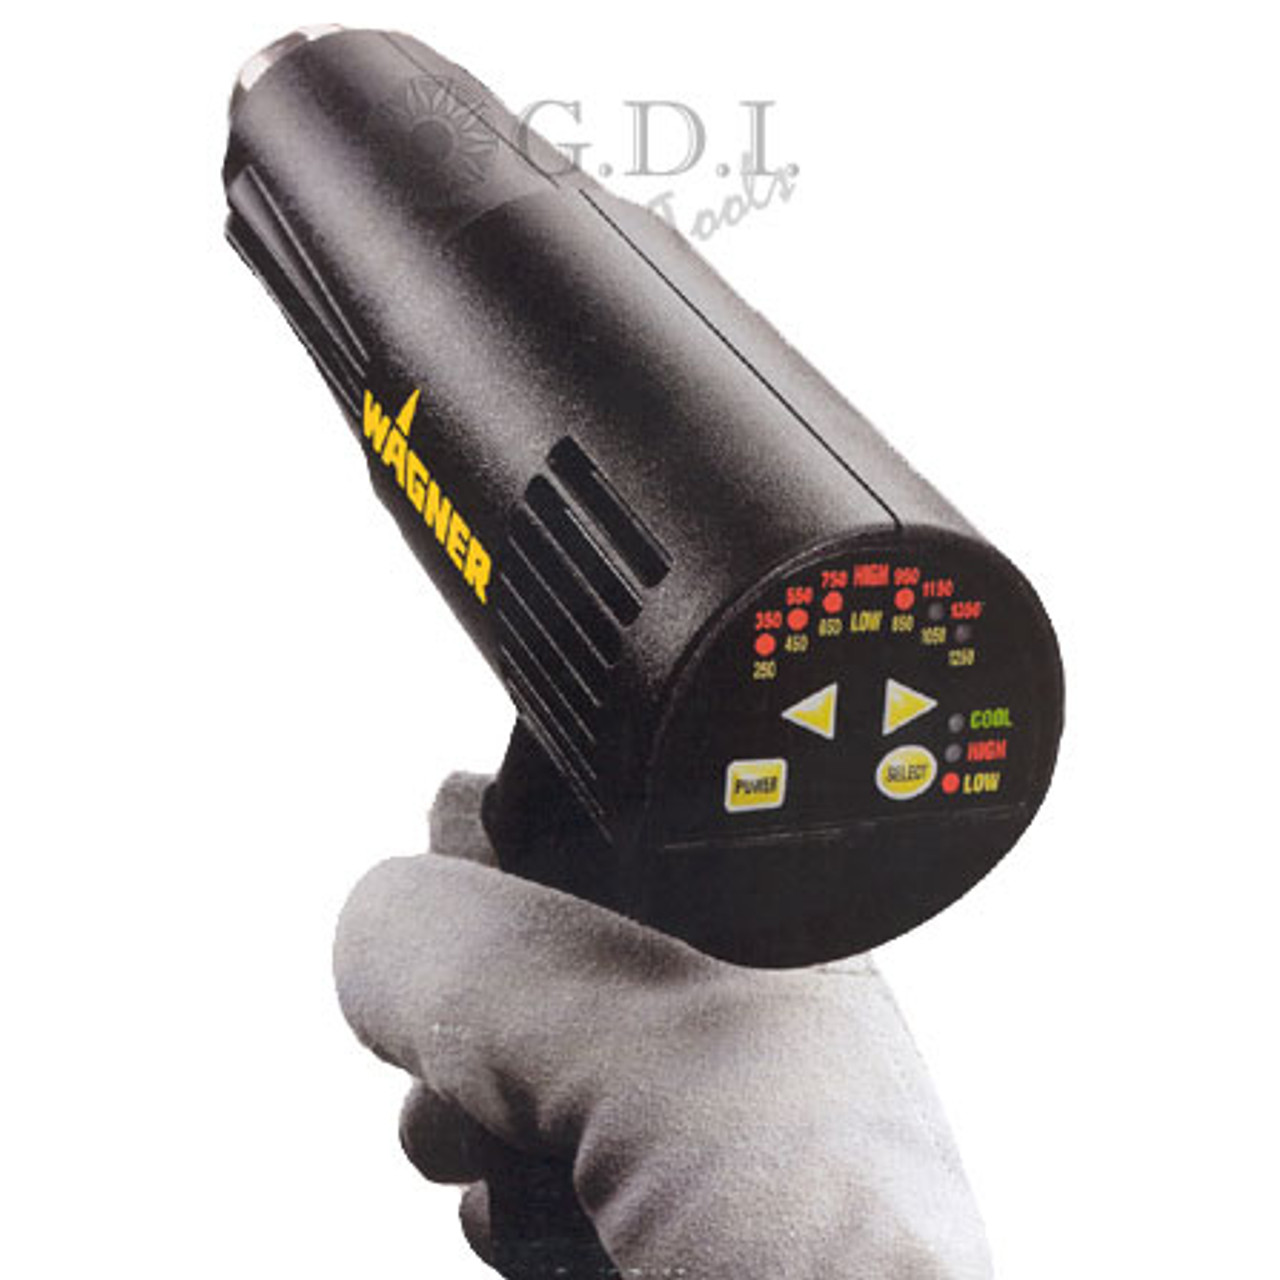 Wagner Digital Heat Gun, HT3500 (GT251)